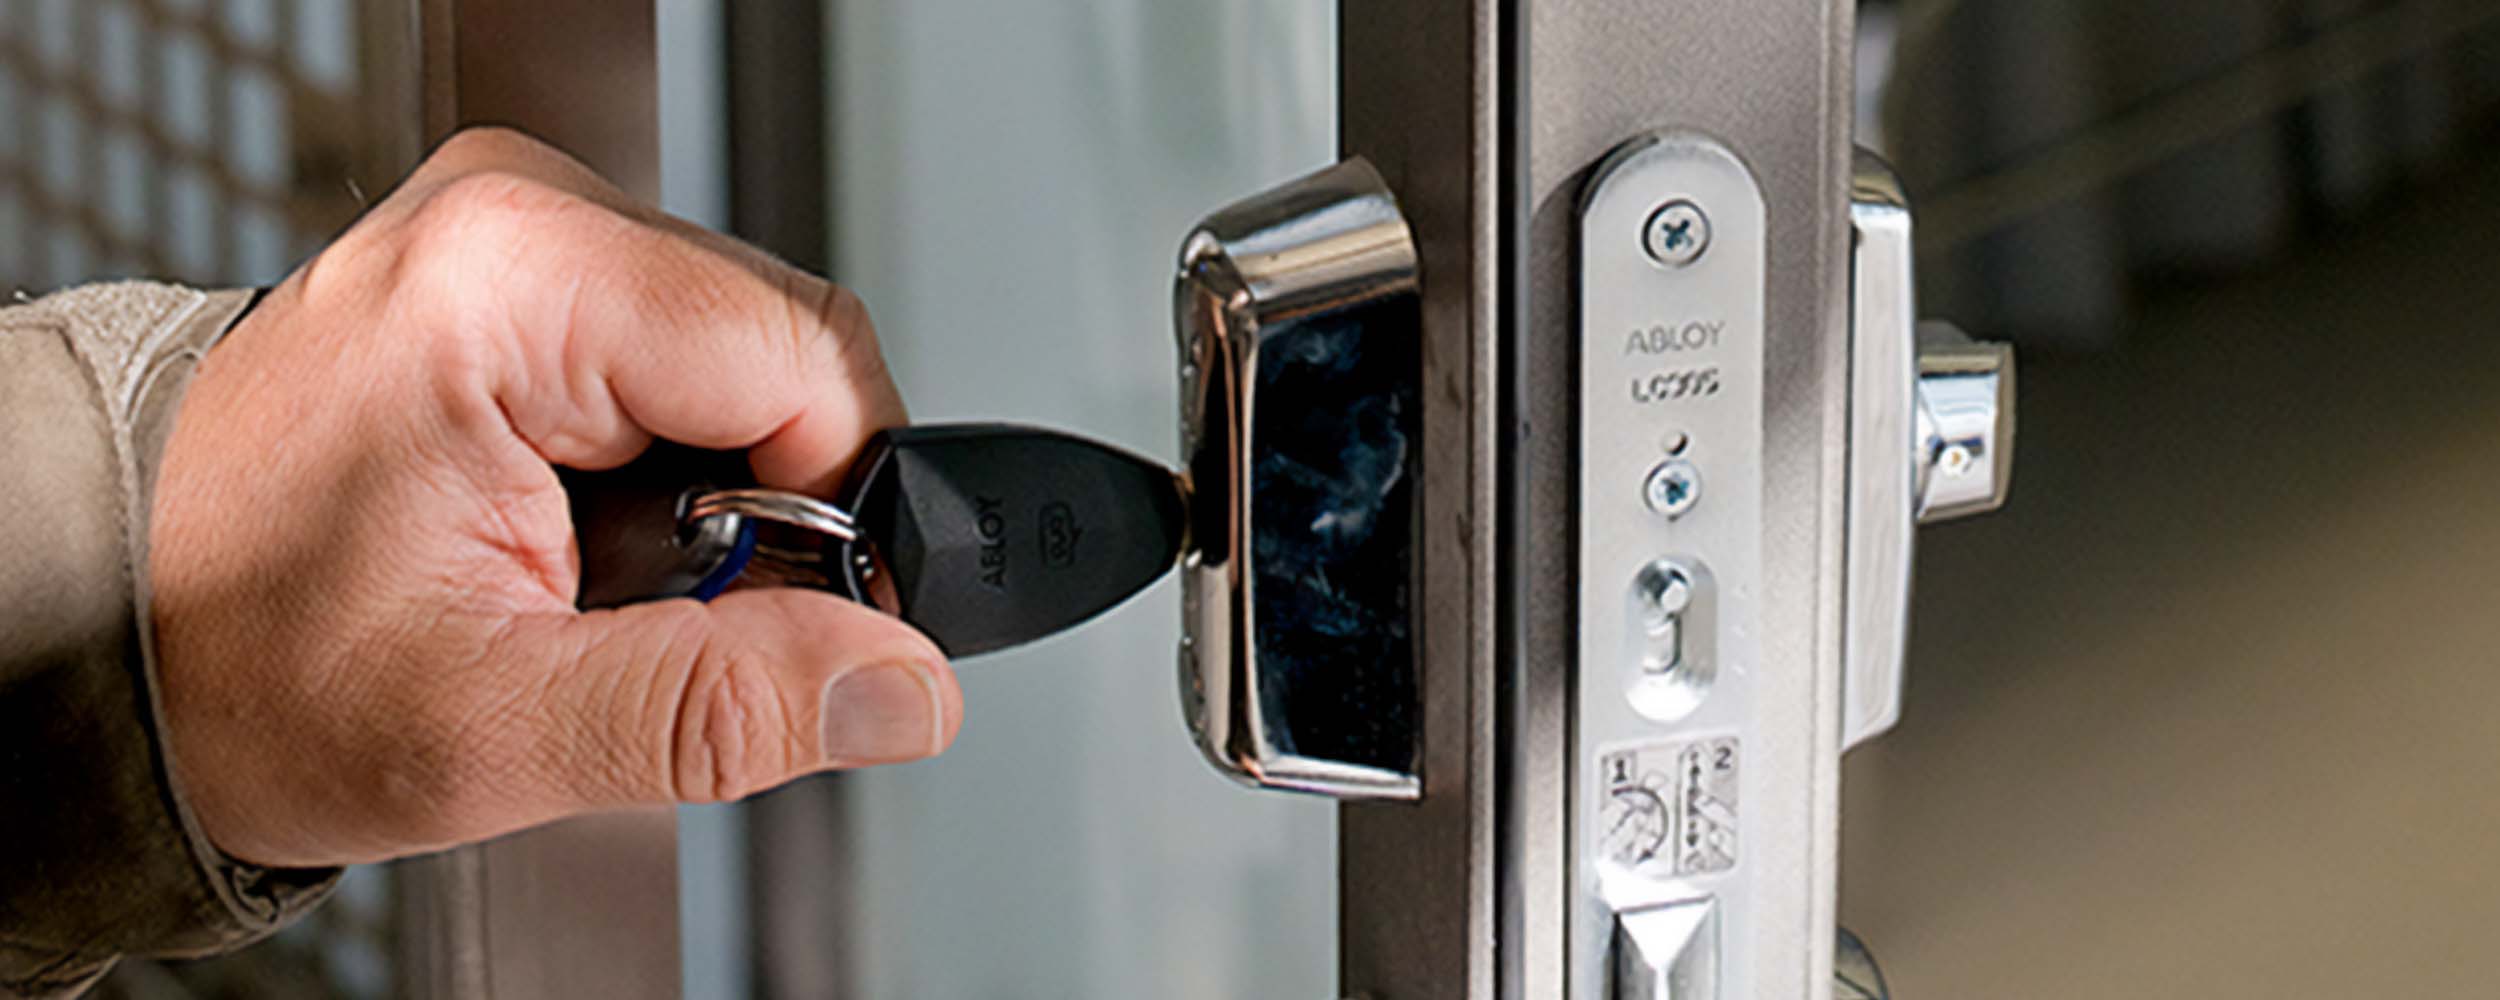 Unlocking an Abloy master key controlled lock